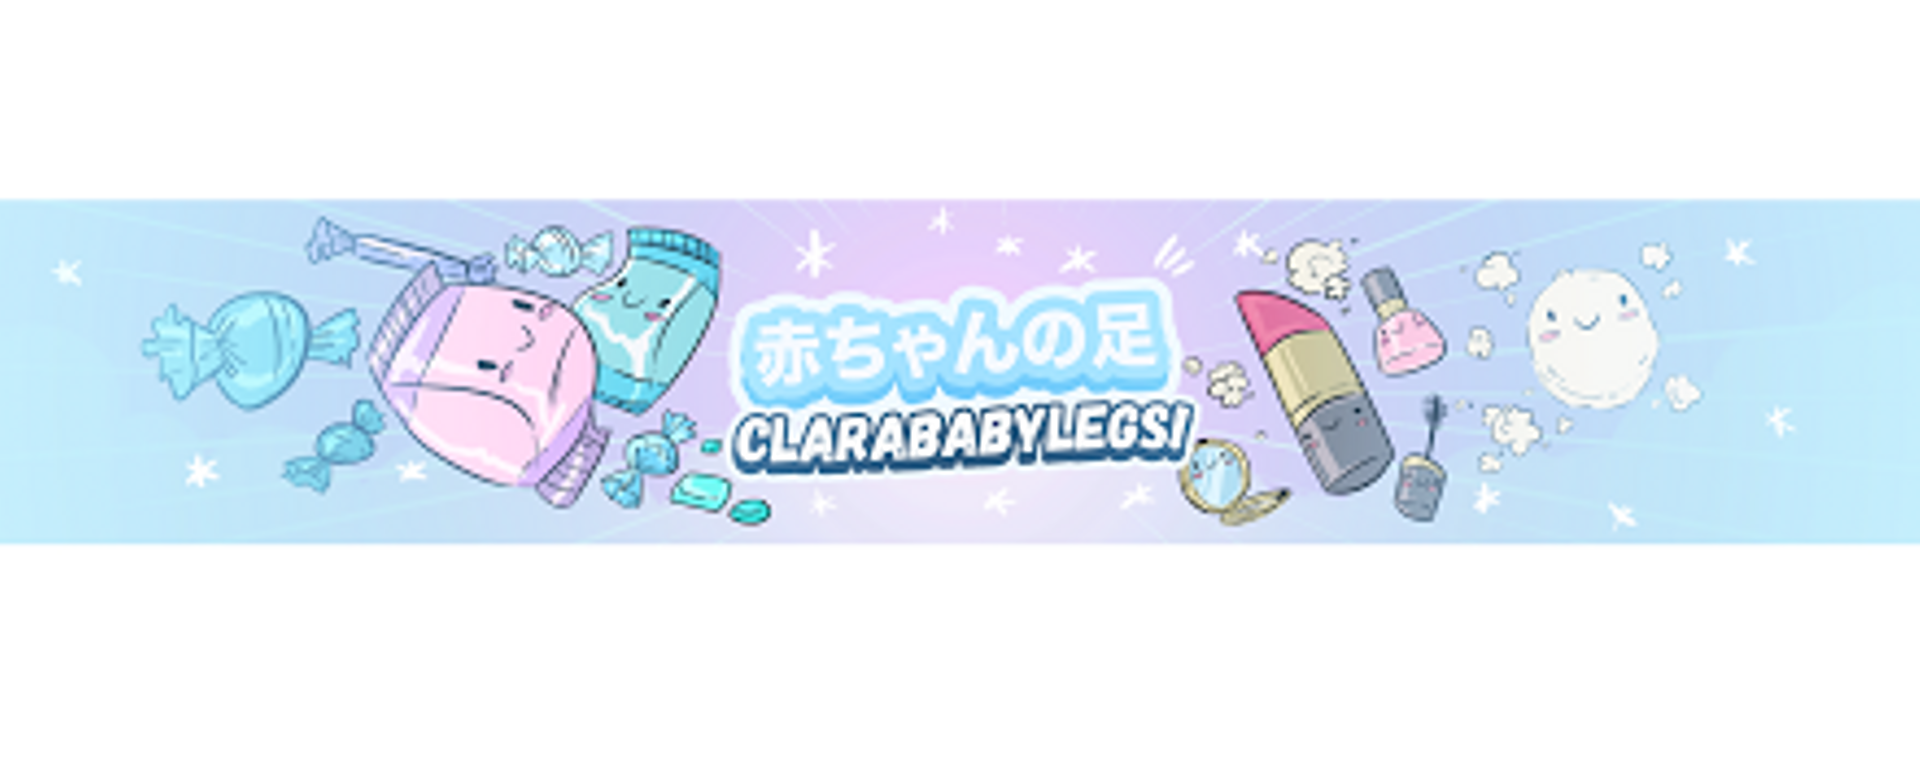 ClaraBabyLegs is creating YouTube videos.